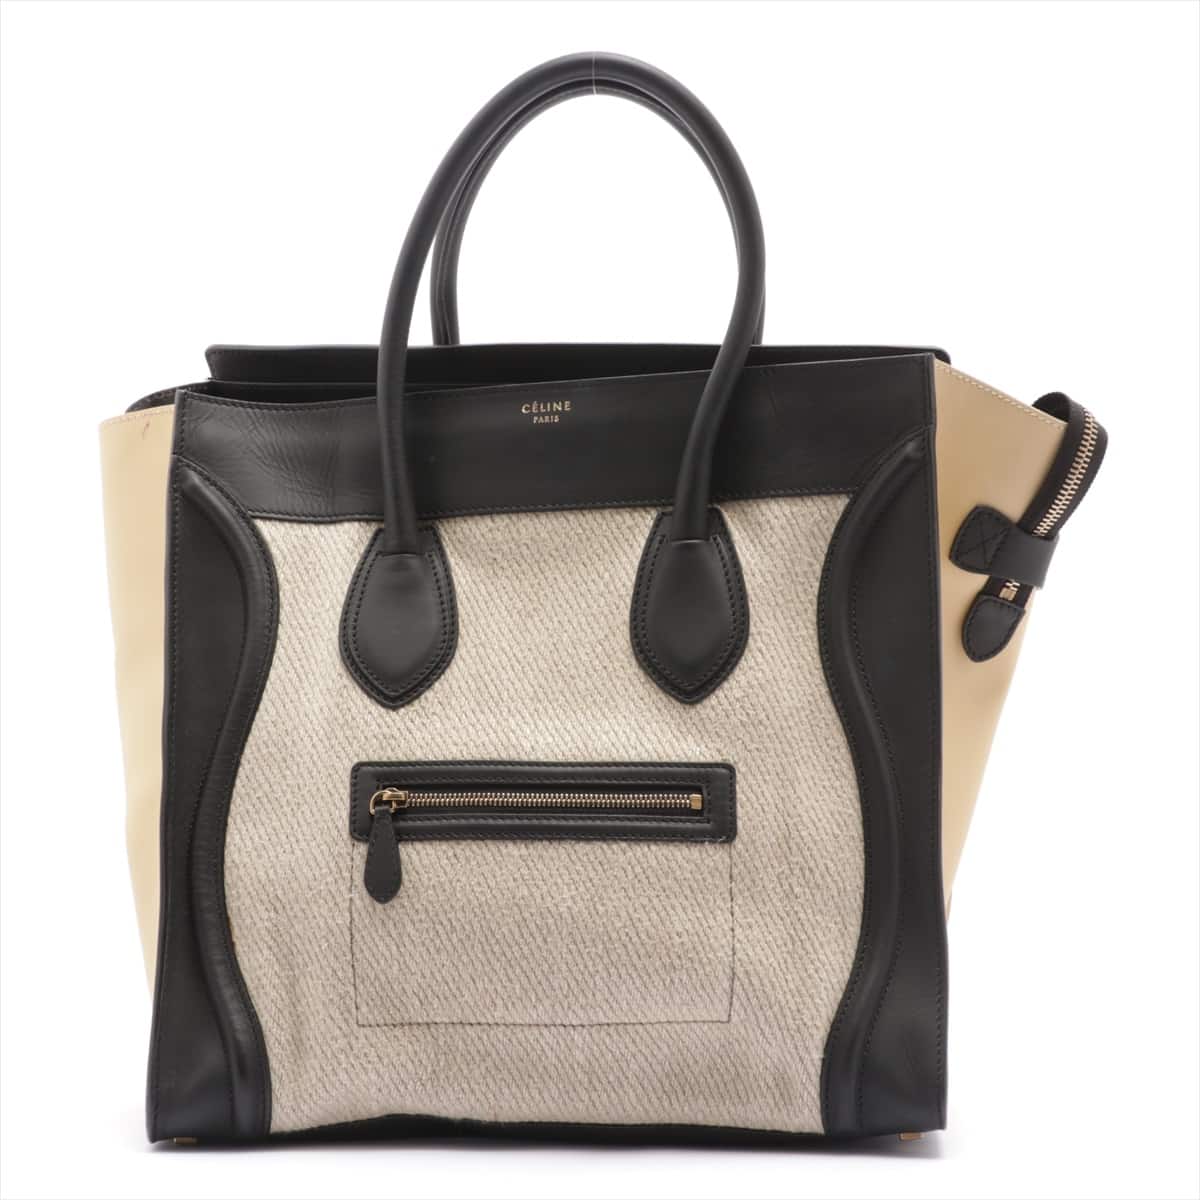 CELINE Luggage Medium Shopper Canvas & leather Tote bag Beige